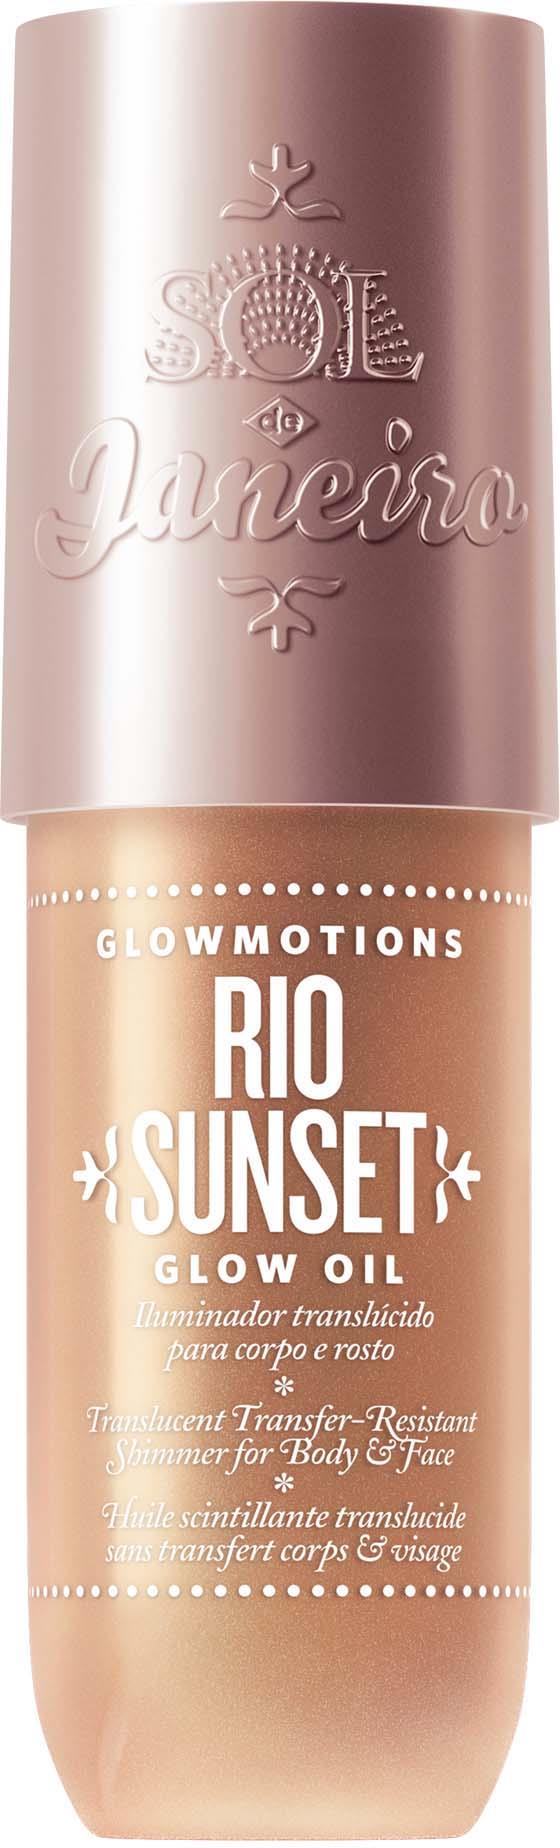 Sol de Janeiro - Glowmotions Glow Body Oil, Rio Sunset